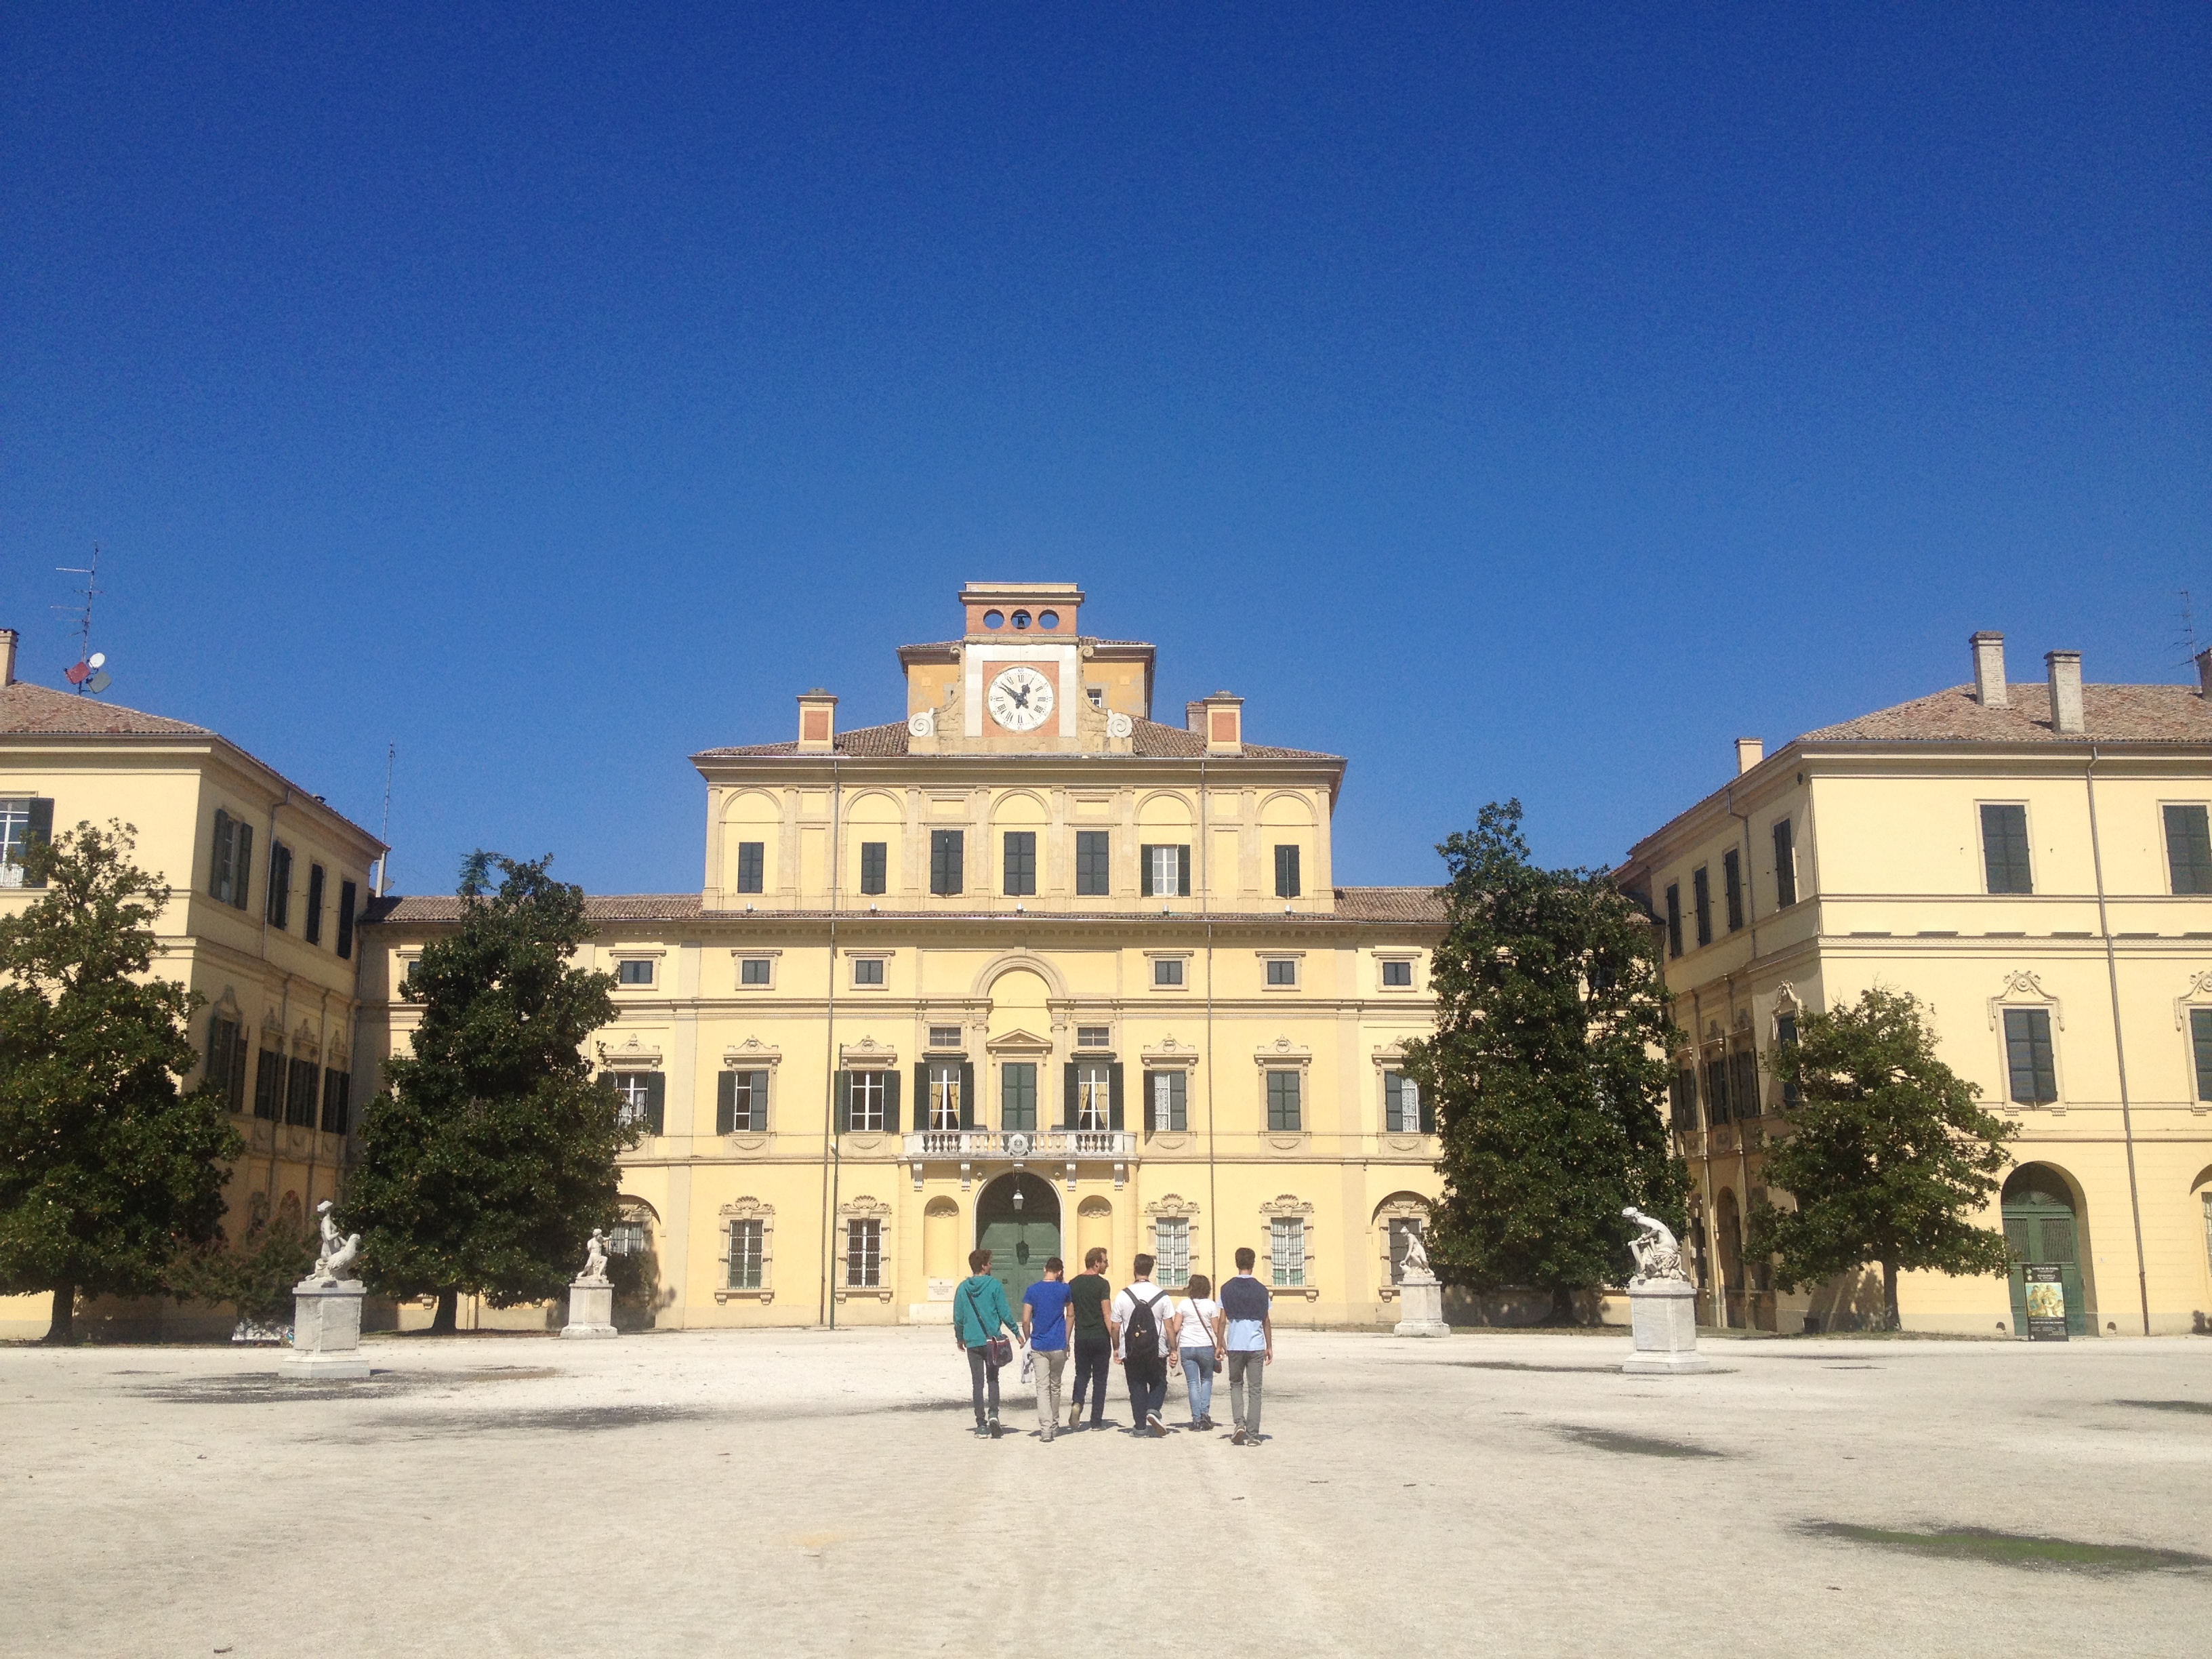 foto: https://upload.wikimedia.org/wikipedia/commons/9/9f/Palazzo_Ducale_Sede_RIS_di_Parma.jpg